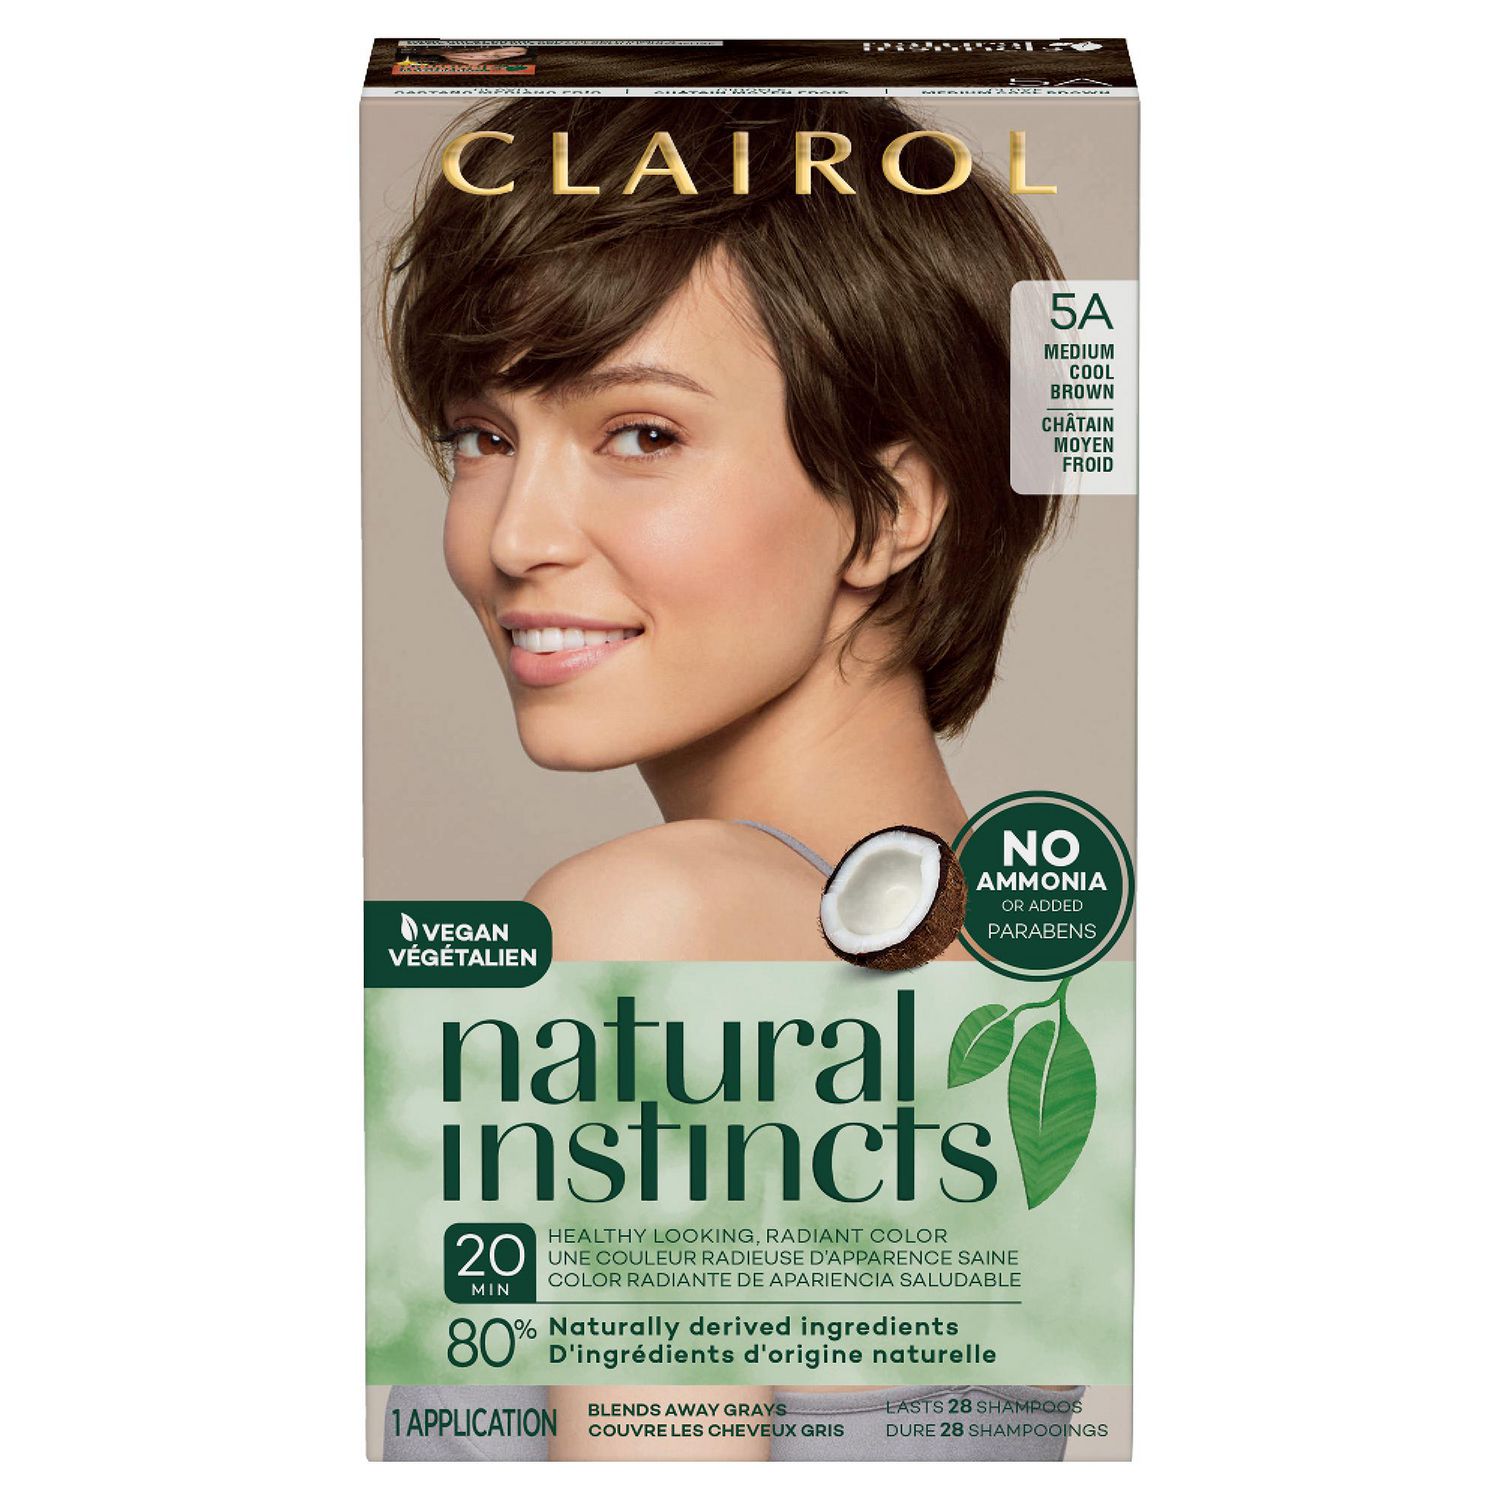 Clairol Natural Instincts Semi-permanent Hair Color, Medium Cool Brown, 5a/24 Hair Colour Treatments